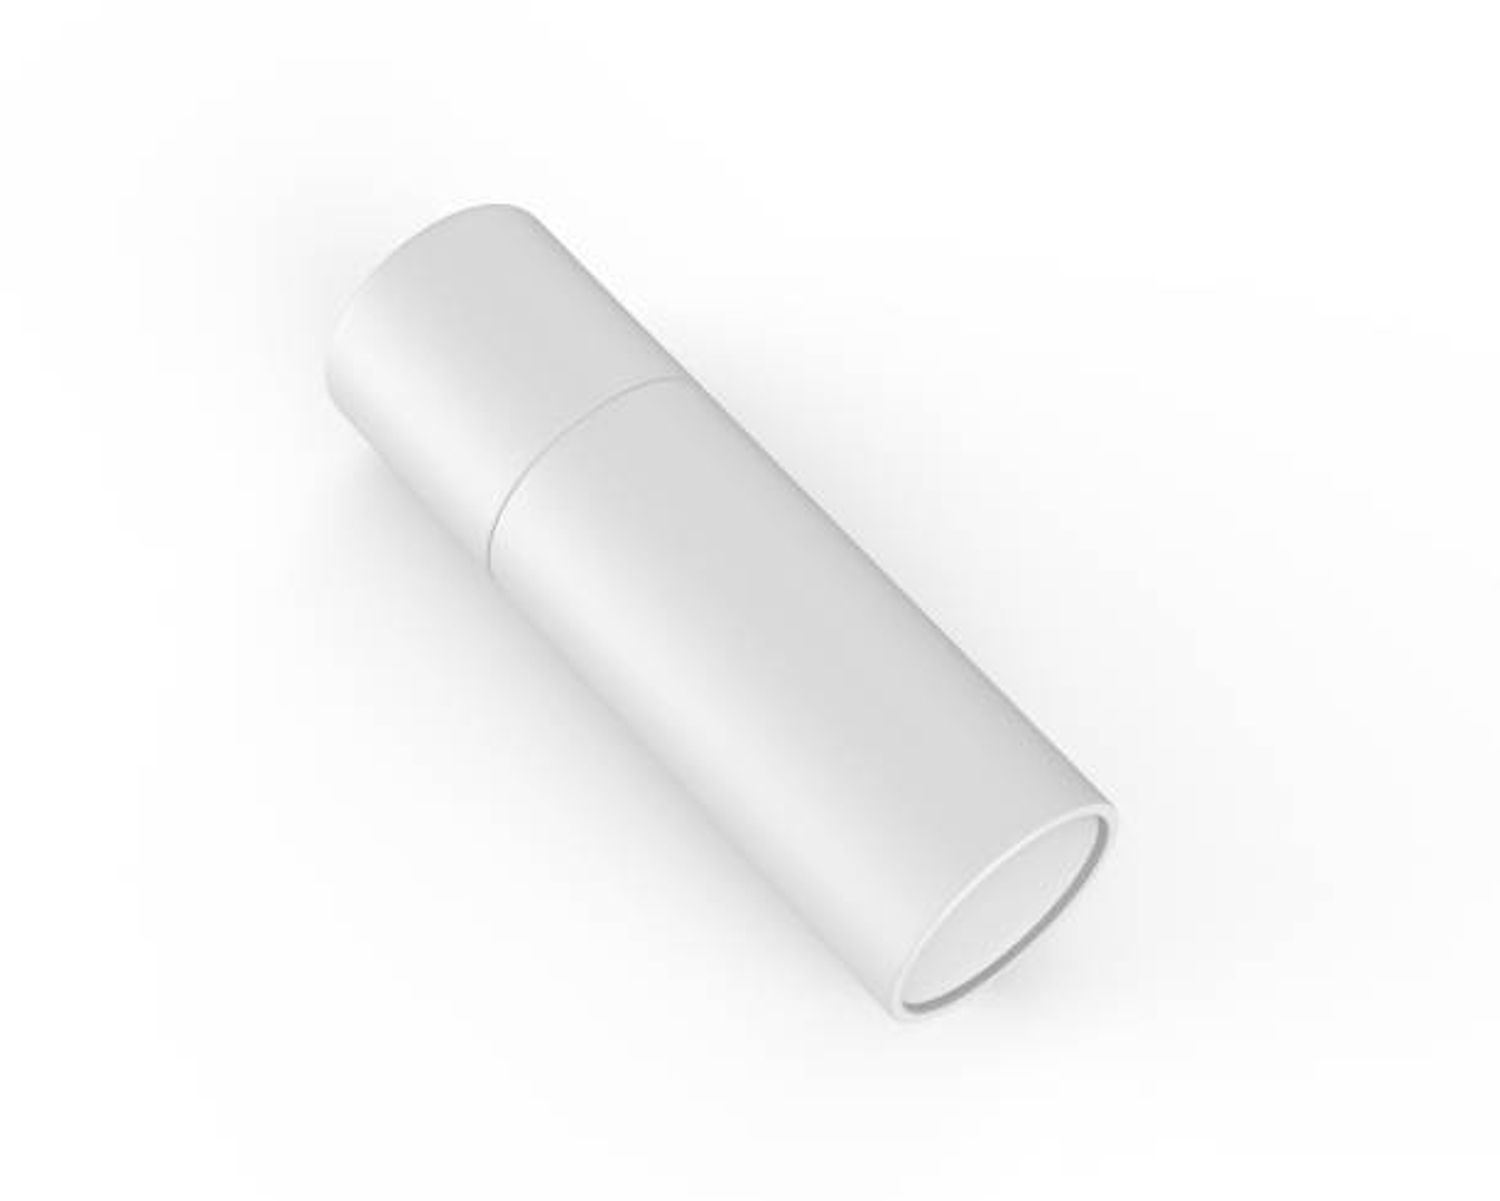 White Cardboard Cosmetic Lip Balm Paper Tube